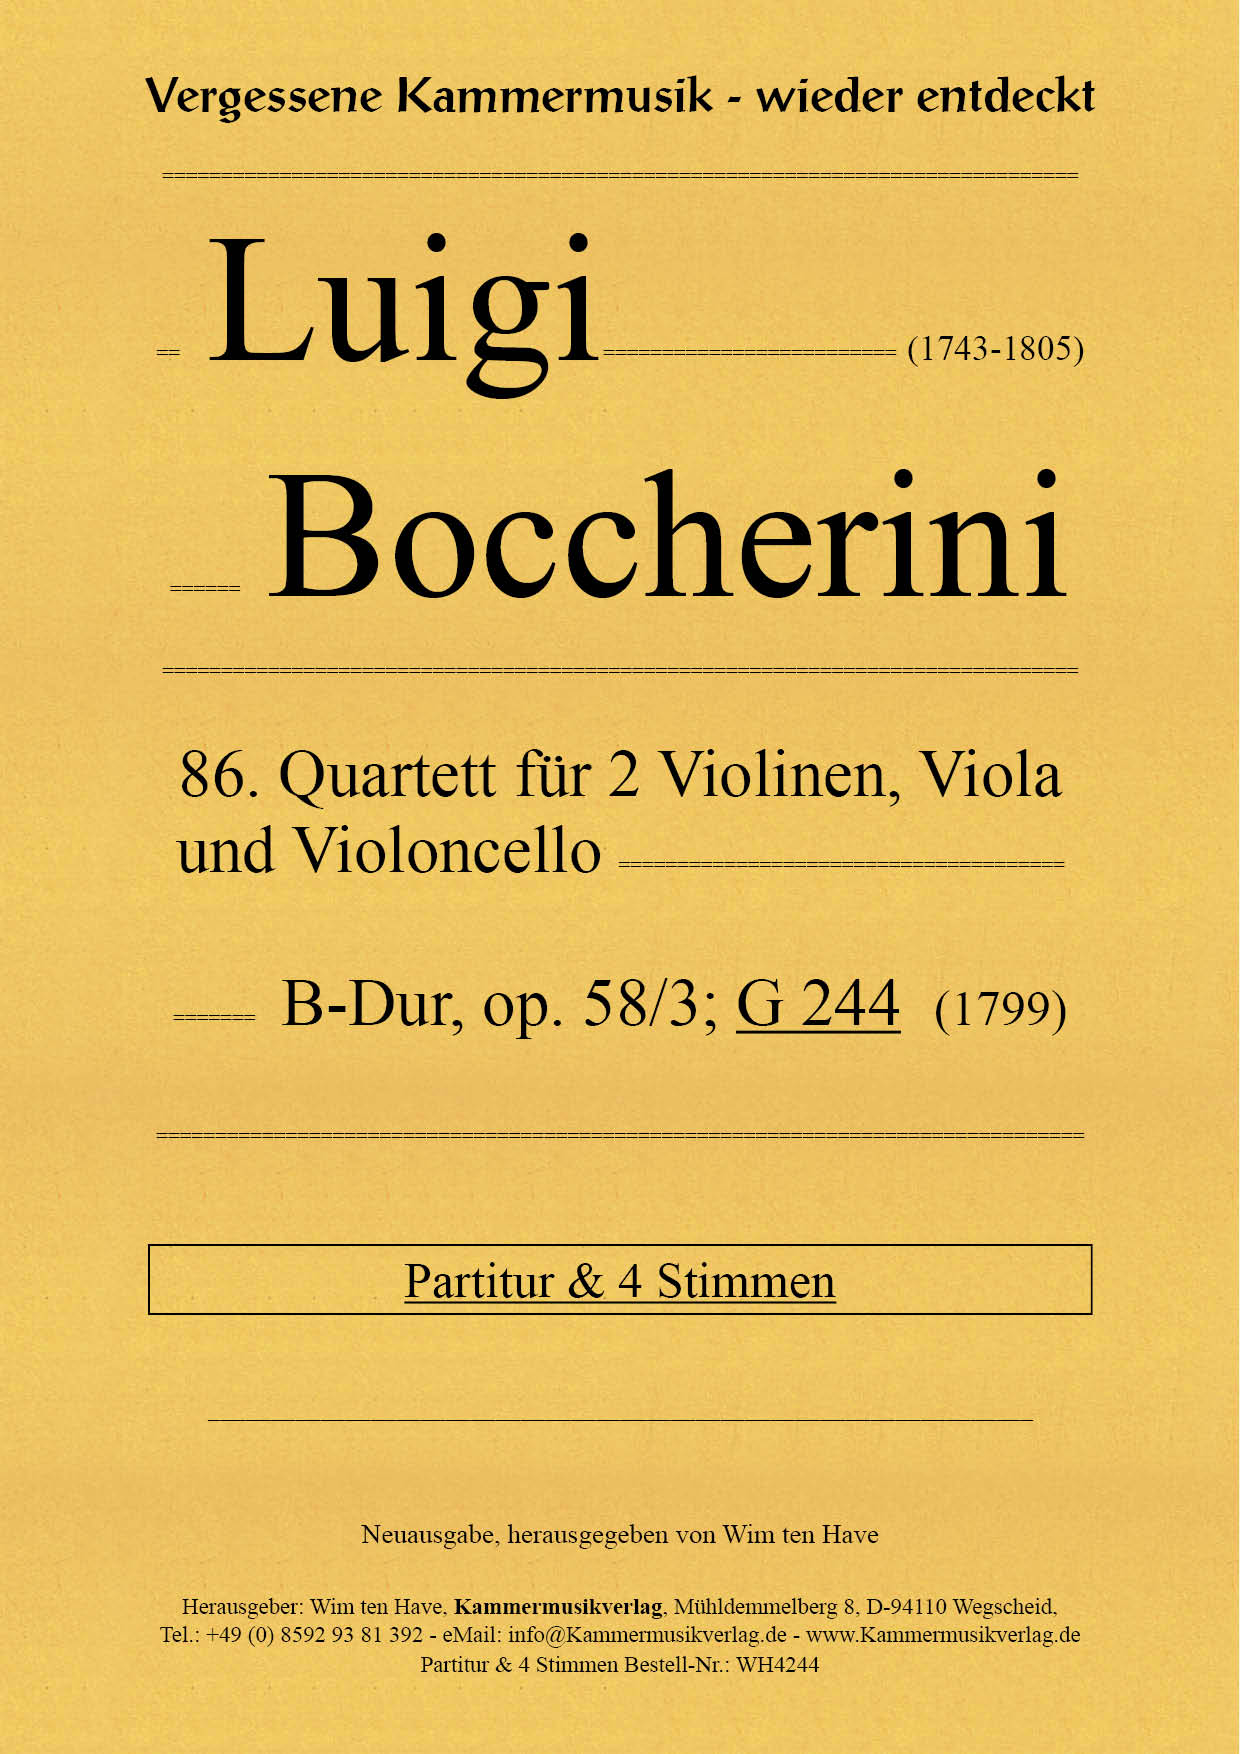 Boccherini: String Quartet in B-flat Major, G 244, Op. 58, No. 3